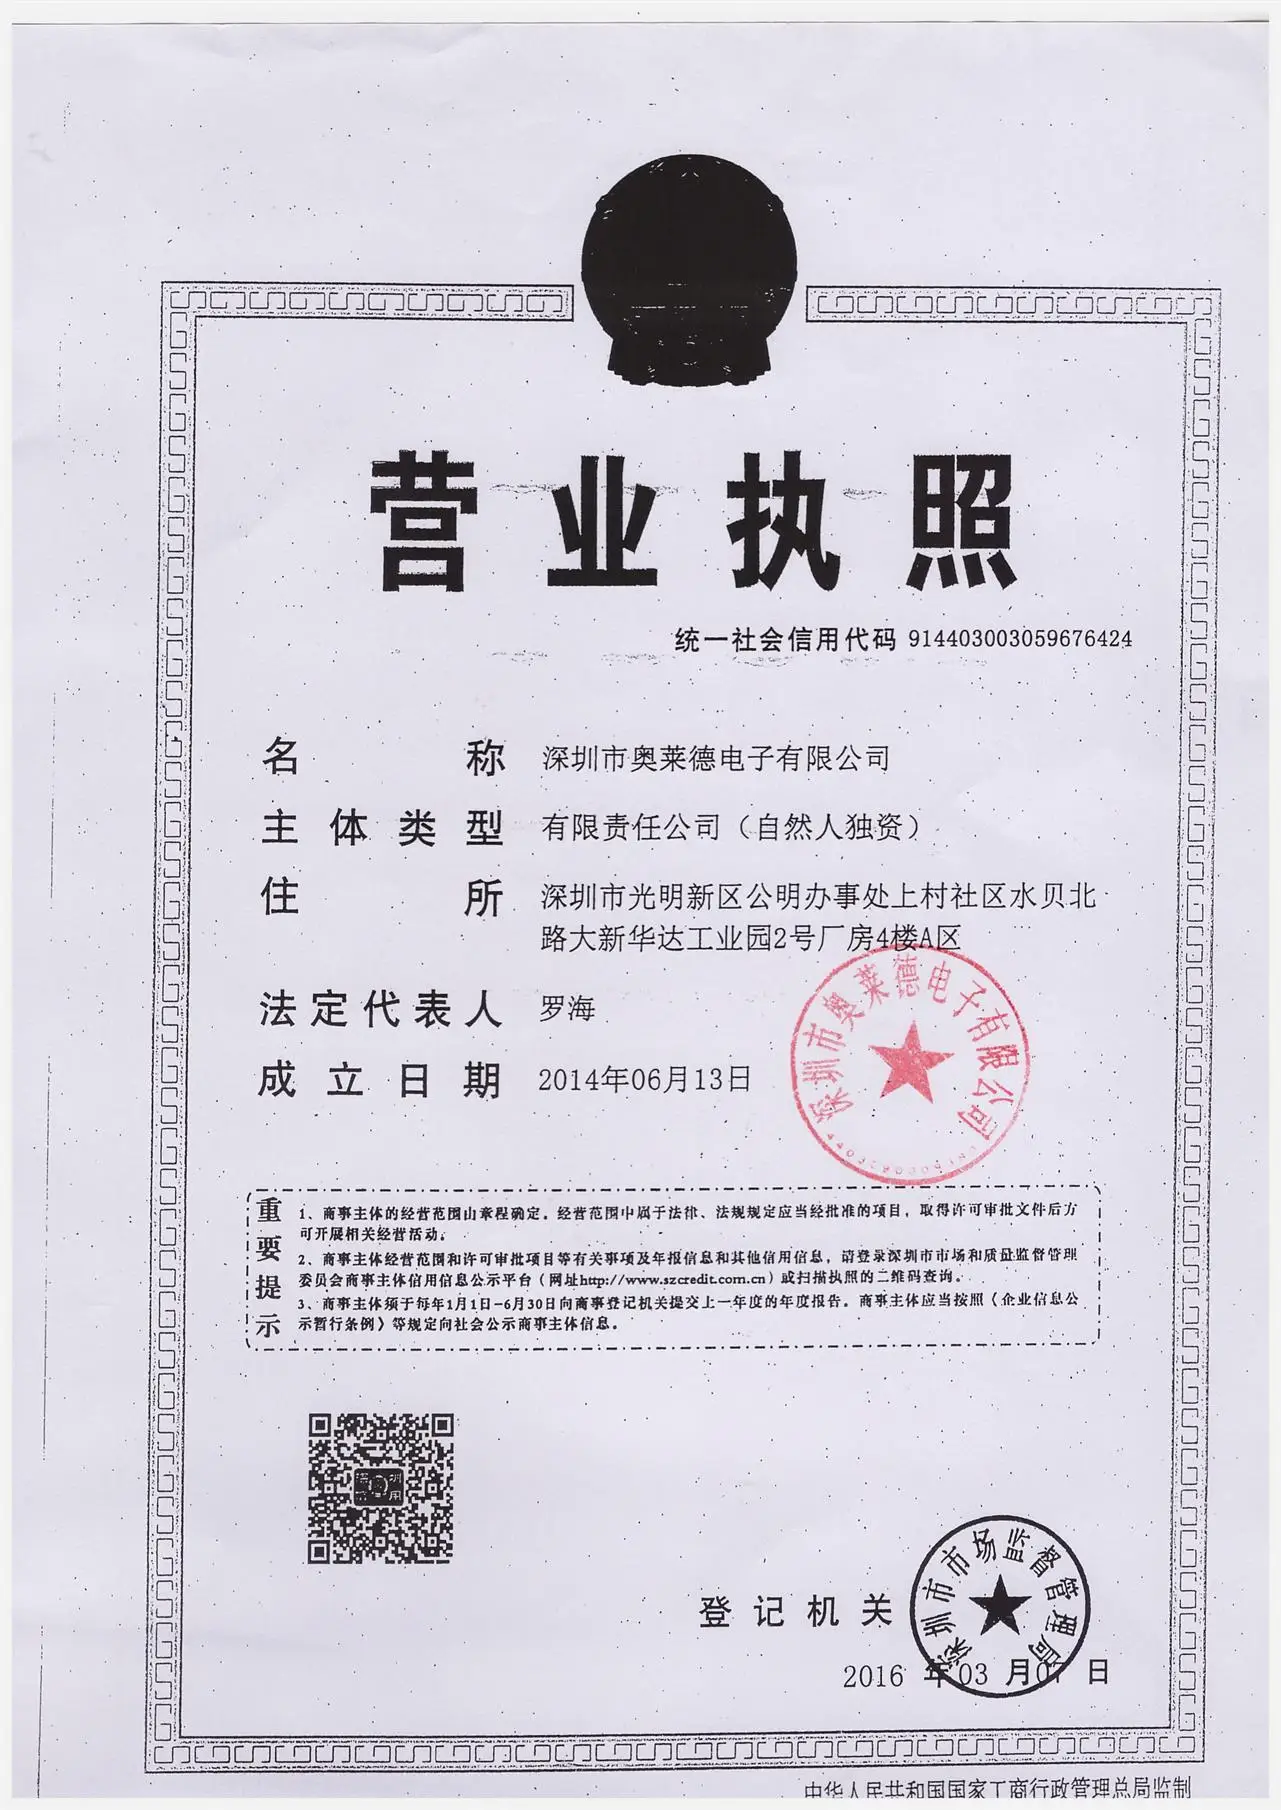 Company Overview - Shenzhen Ao Lai De Electronic Co., Ltd.